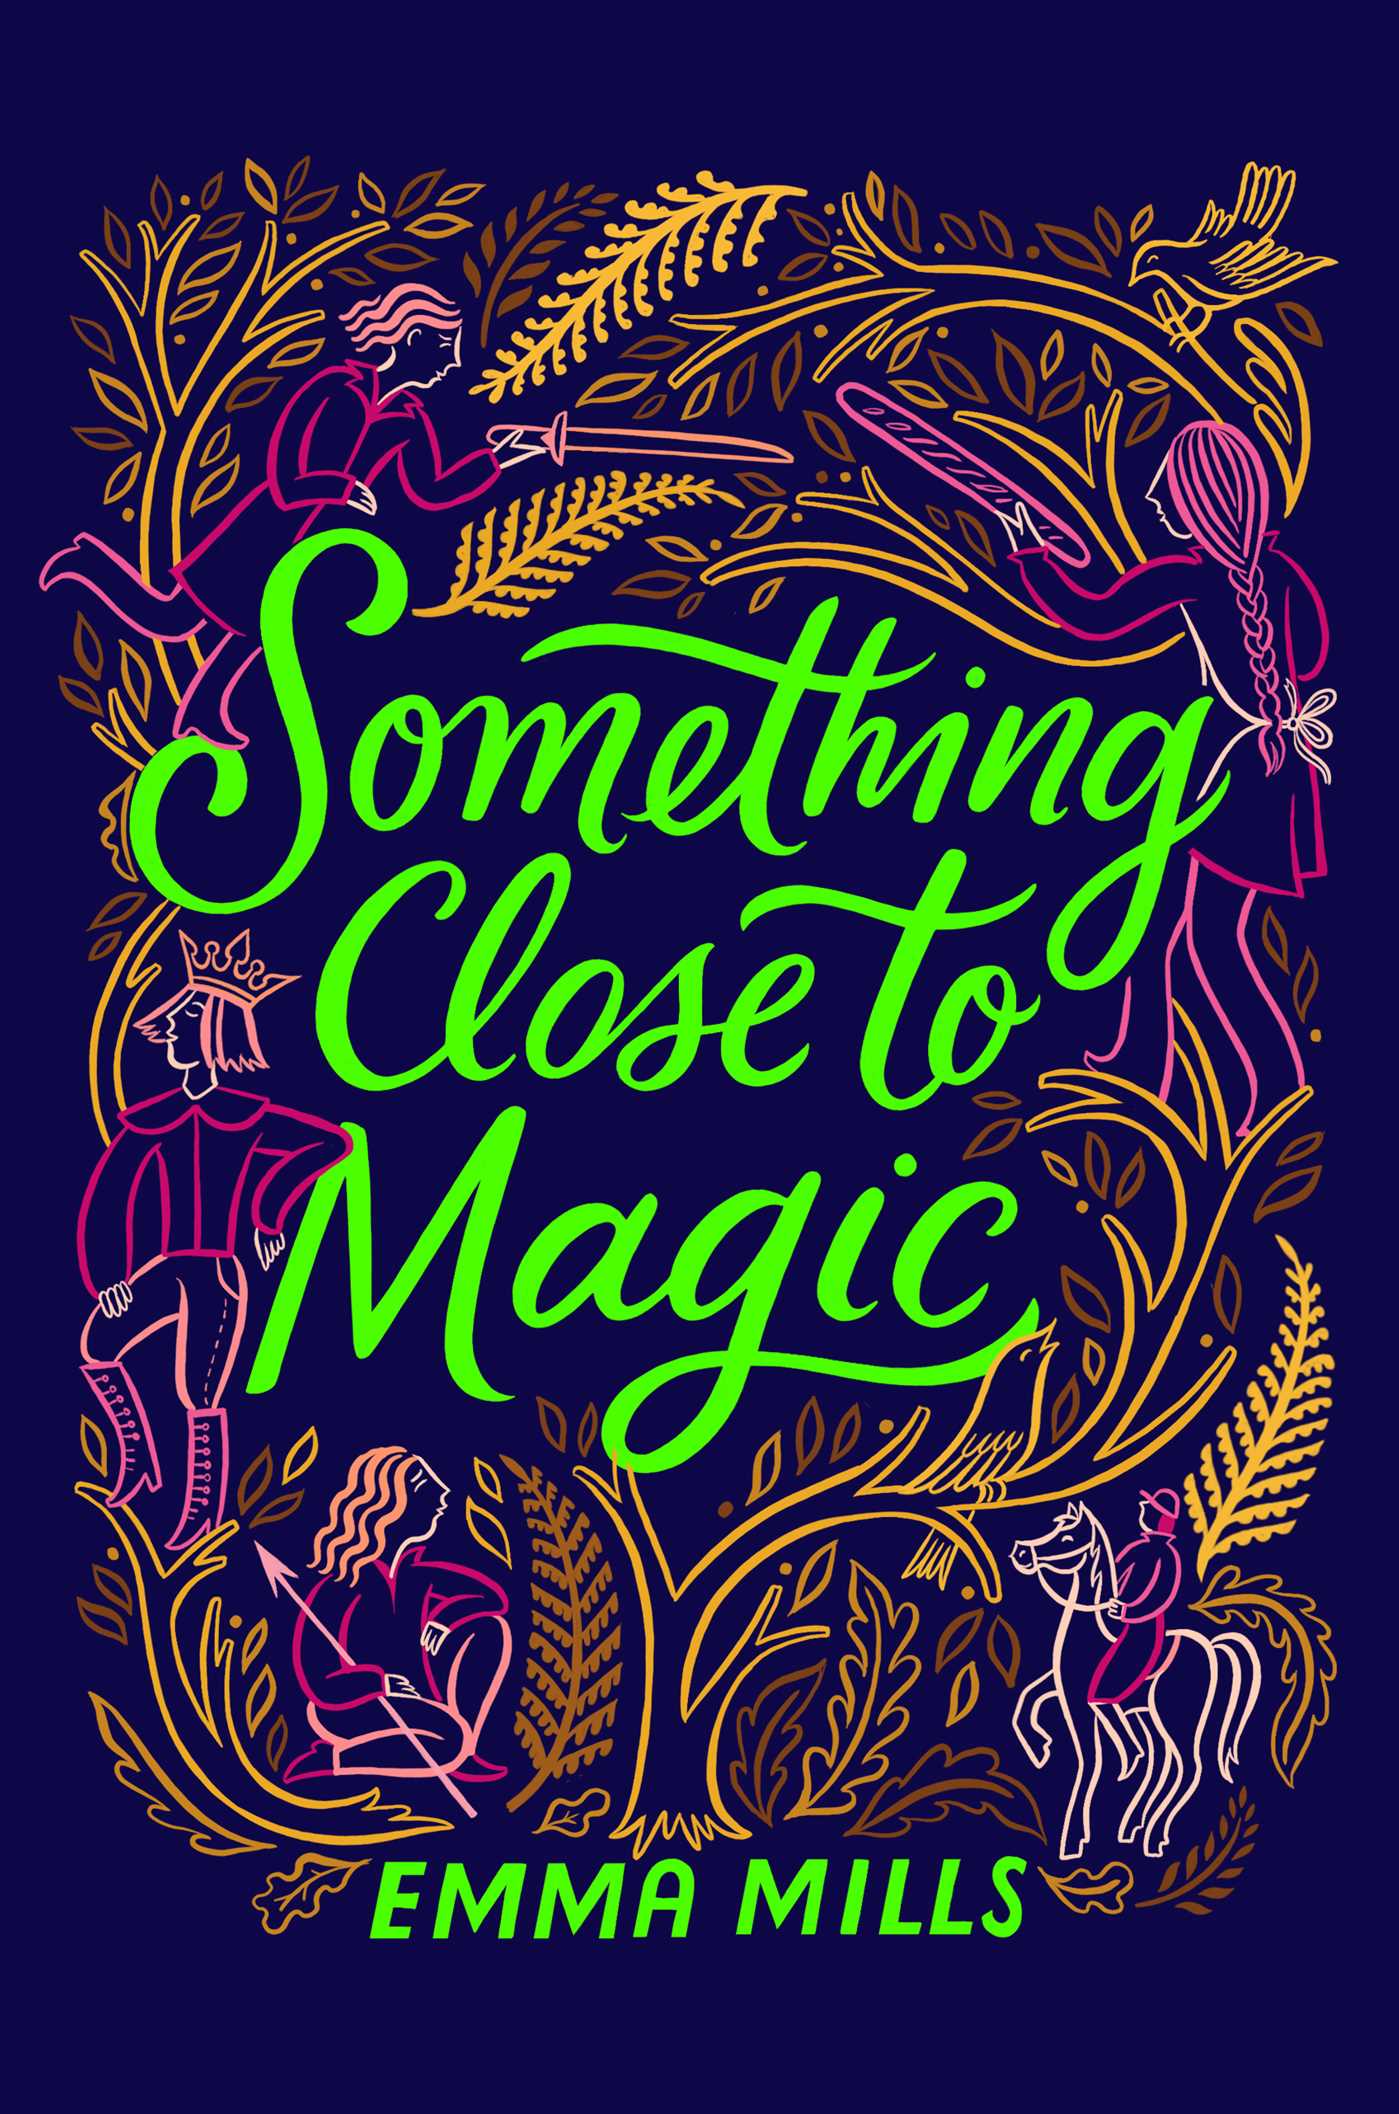 Teen Book Club - "Something Close to Magic"